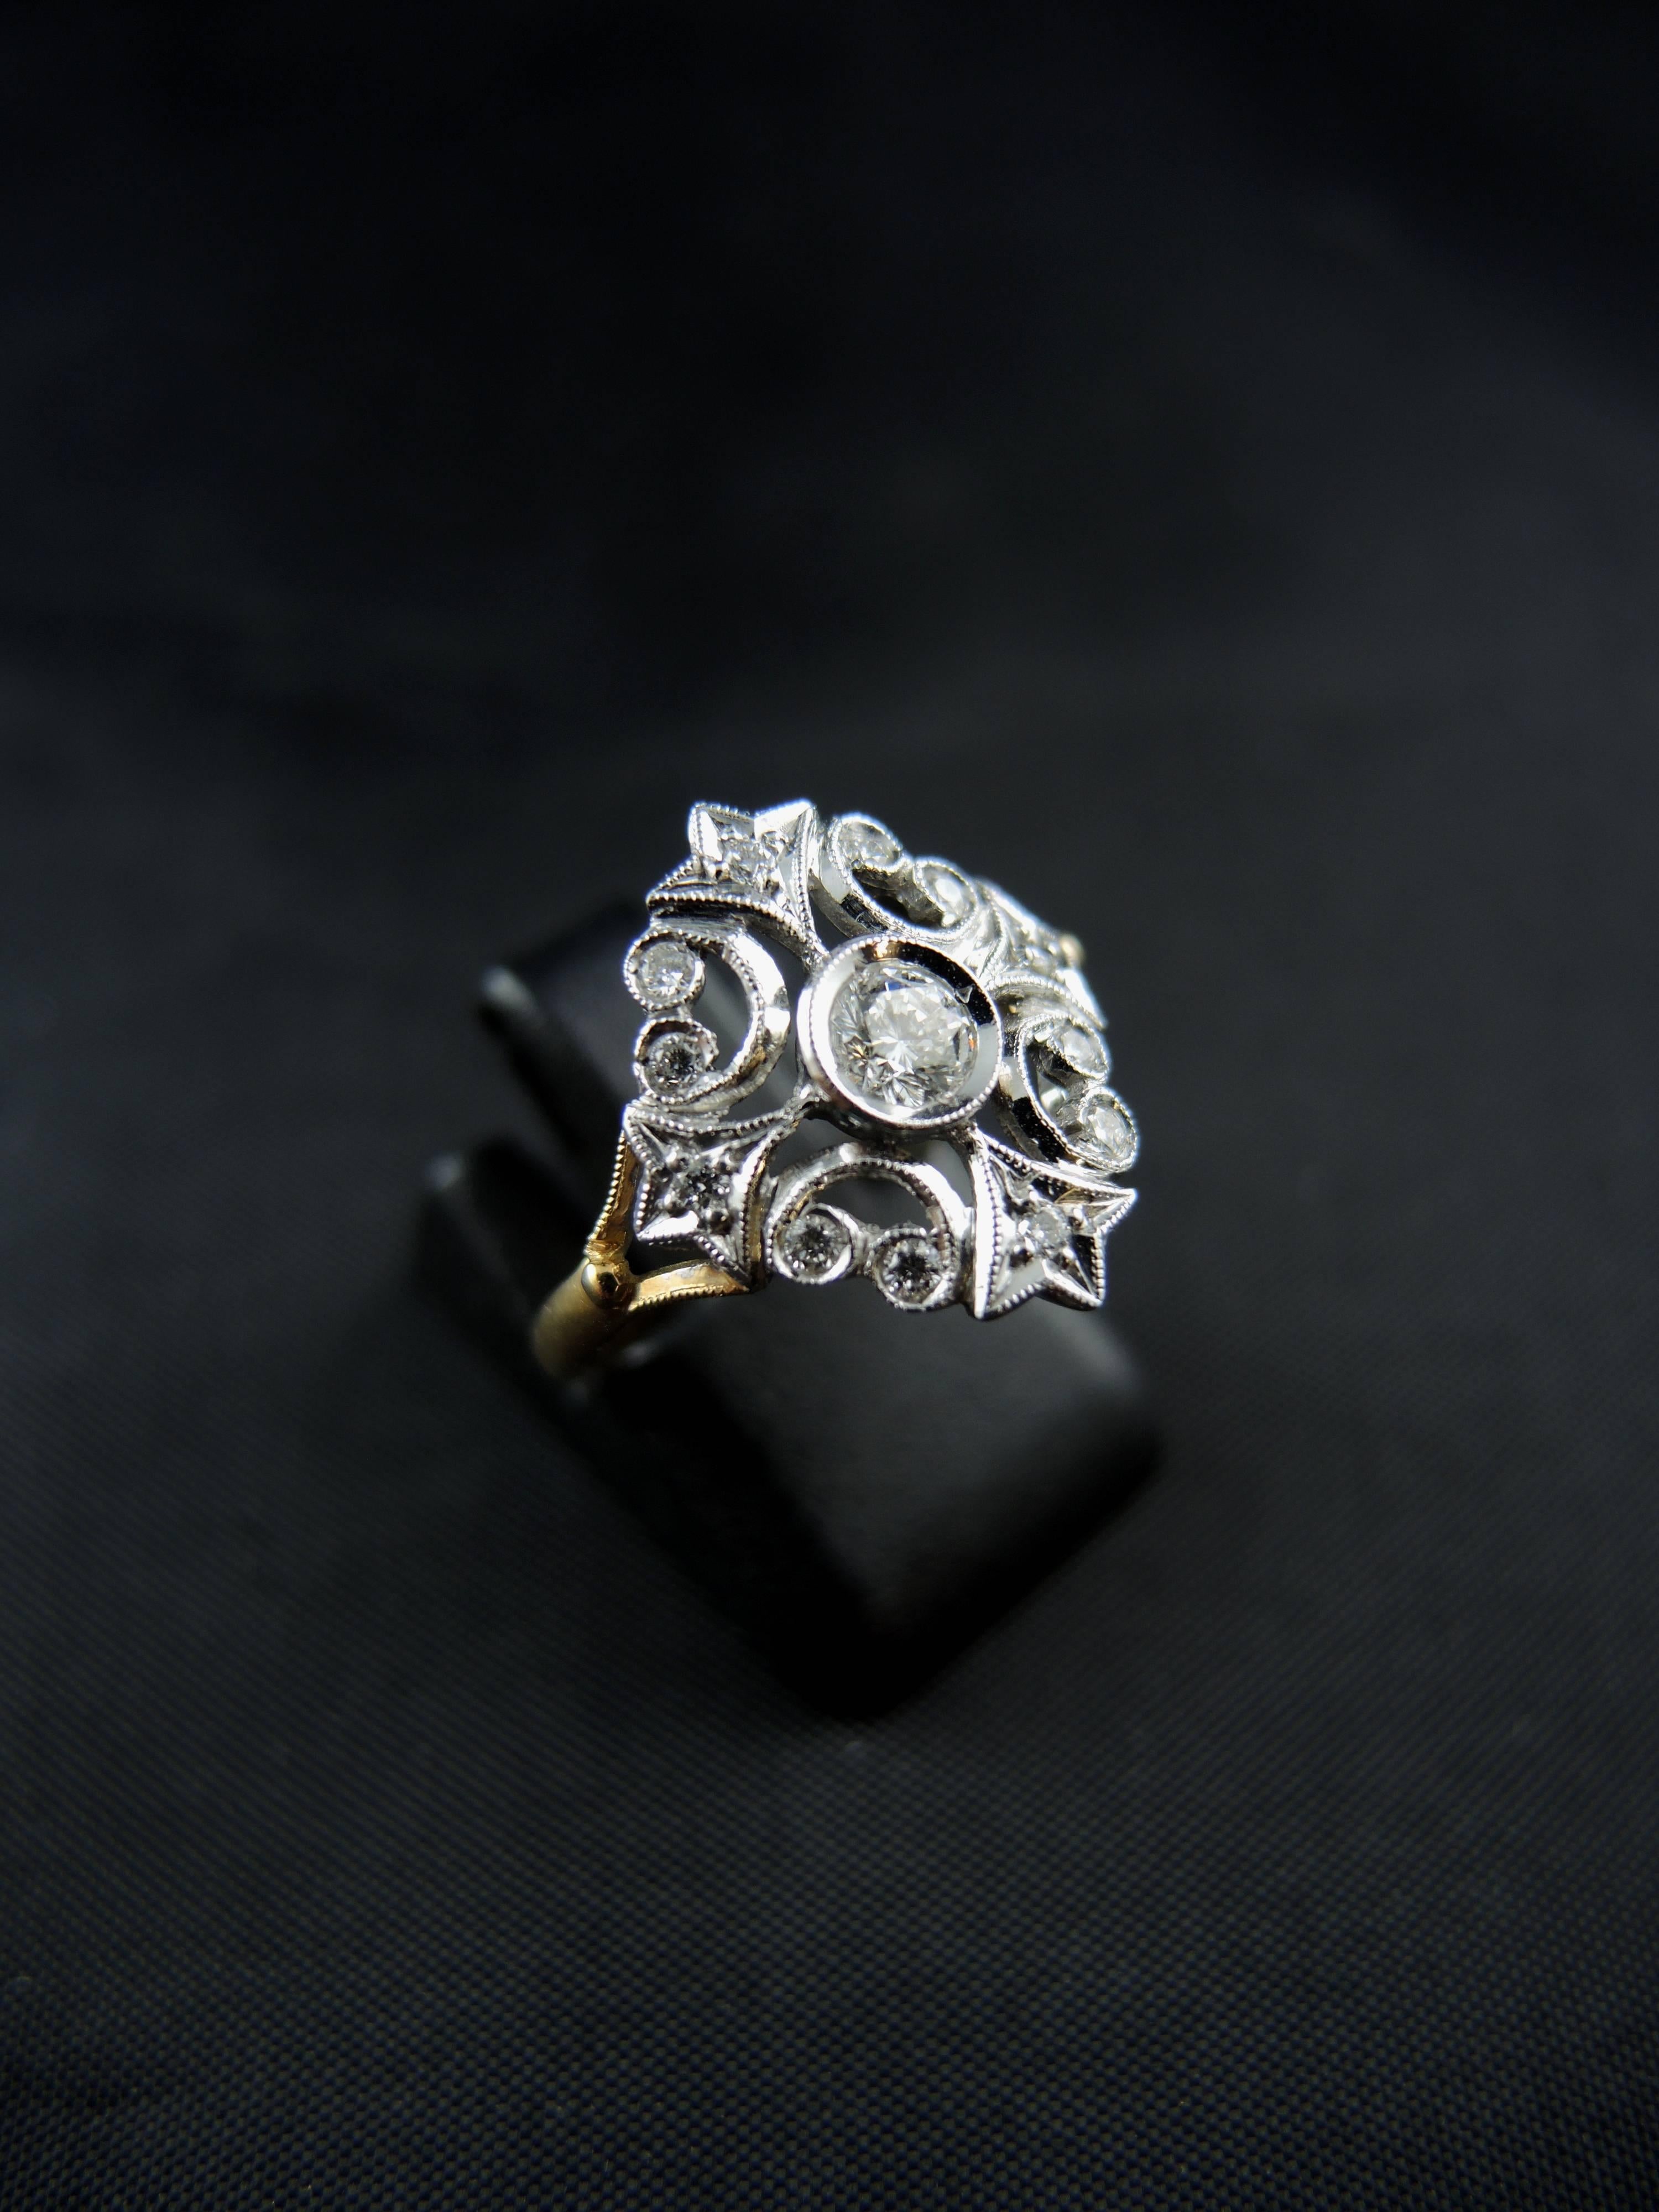 Women's or Men's Belle Époque Style Ring with Diamonds